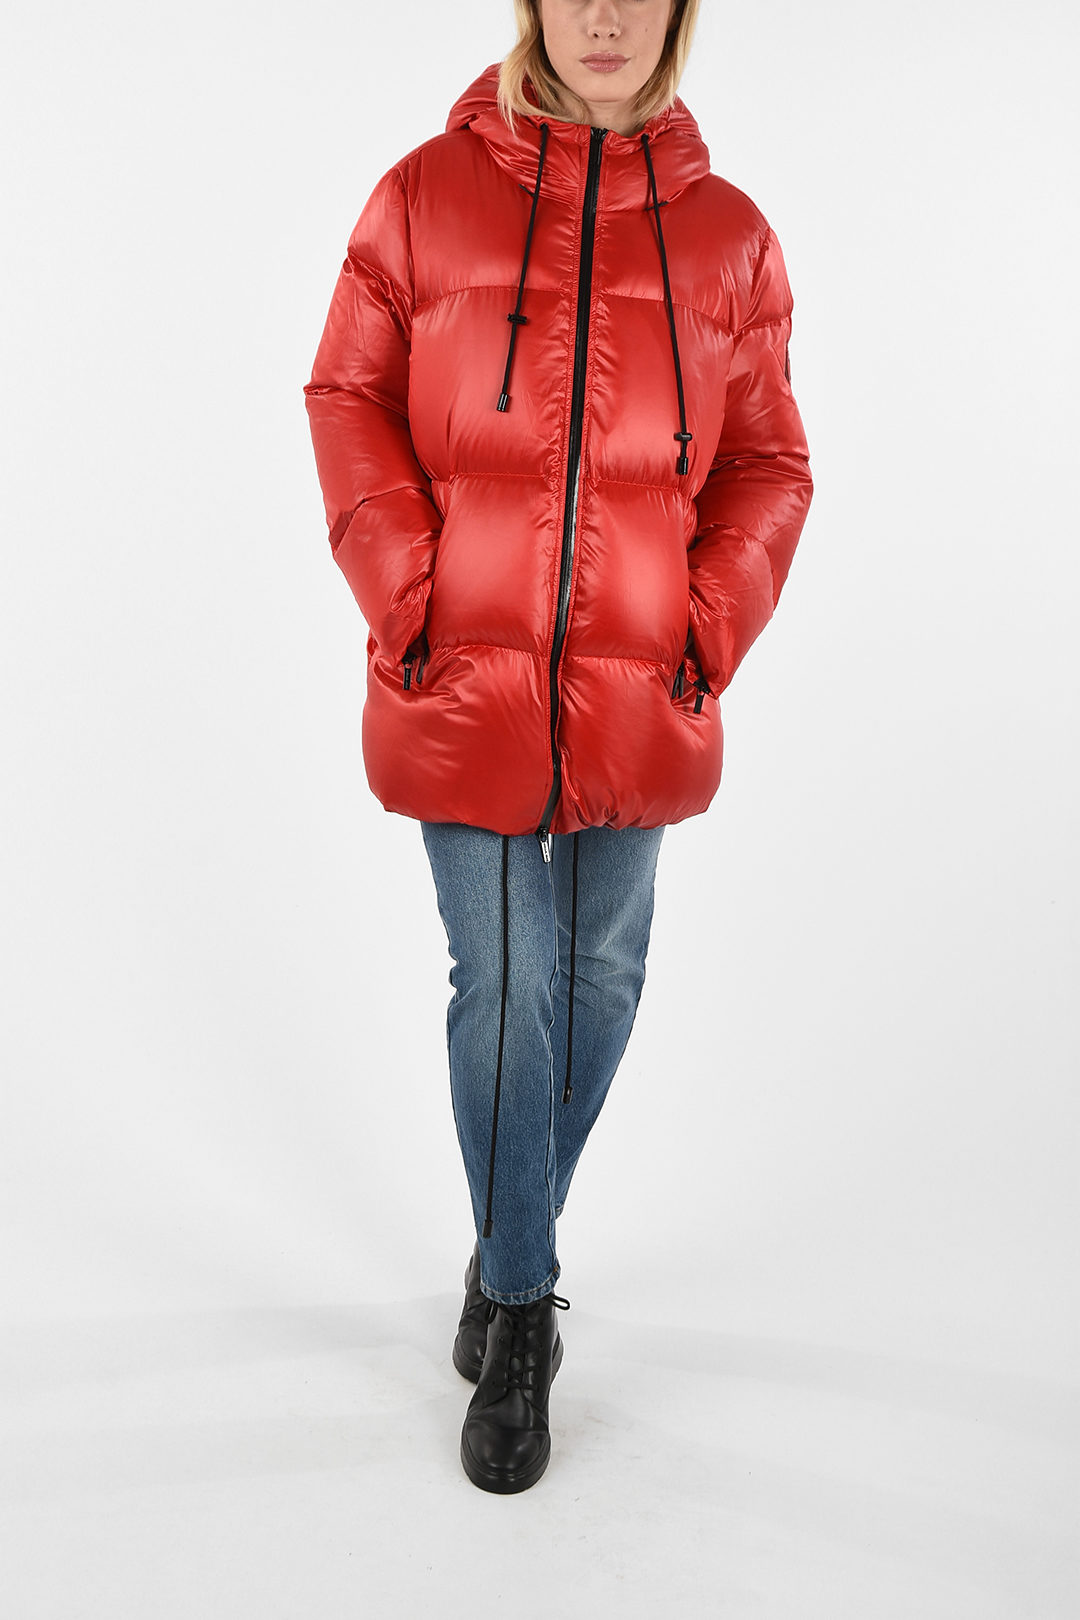 MICHAEL Michael Kors Womens Puffer Down Winter Coat with Fur Hood   Annabella Creations